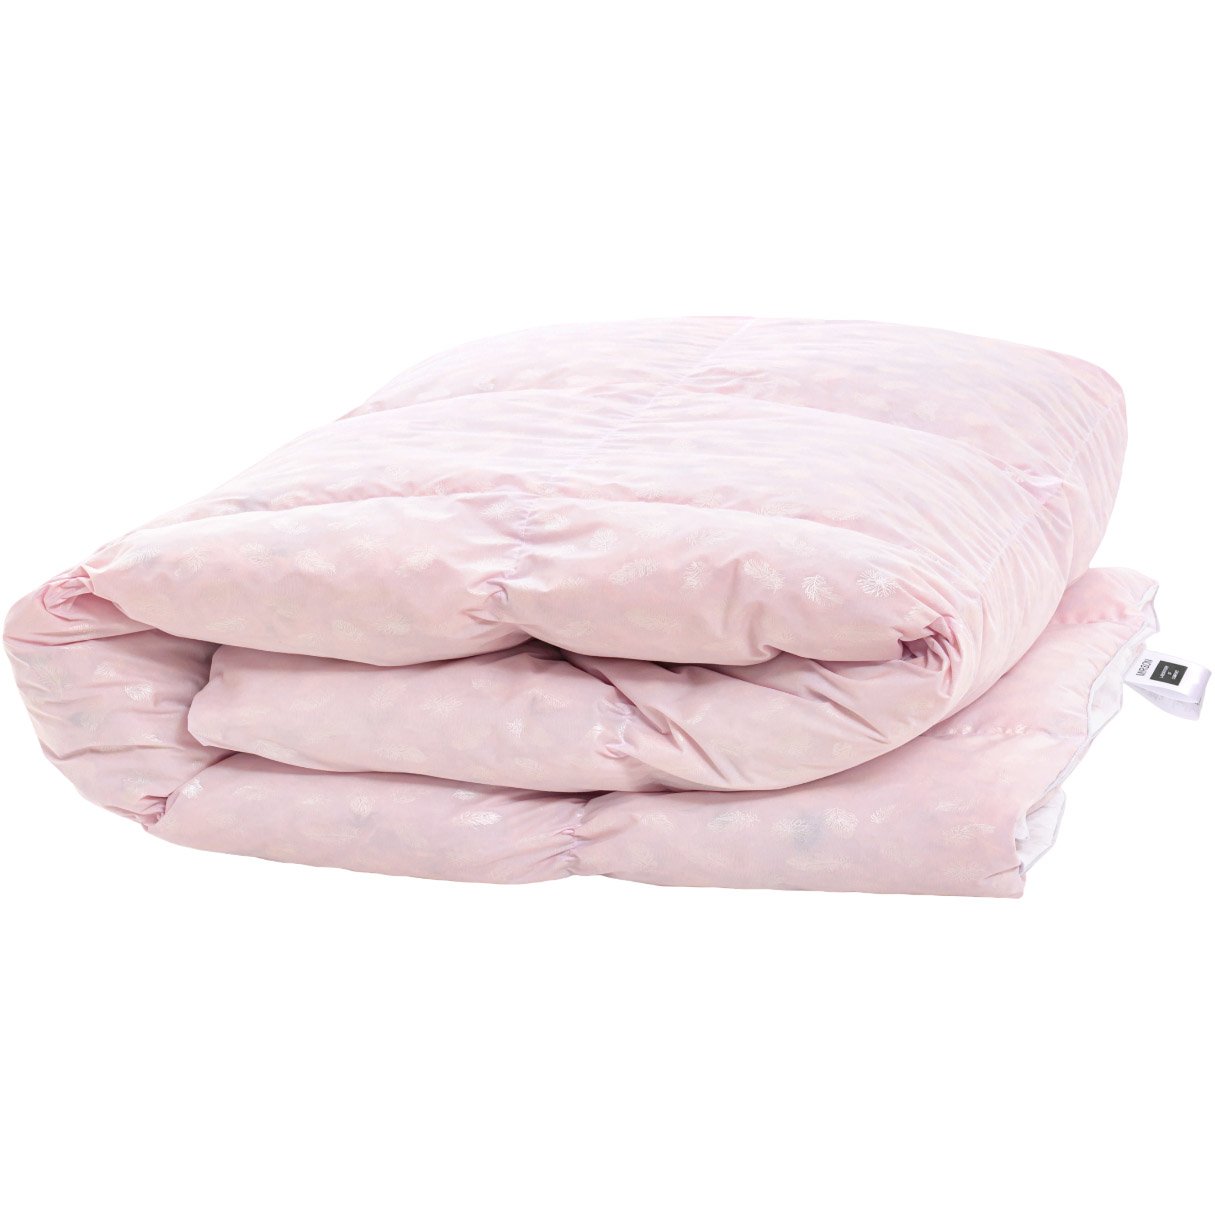 Одеяло пуховое MirSon Karmen №1844 Bio-Pink, 50% пух, двуспальное, 205x172, розовое (2200003013832) - фото 1